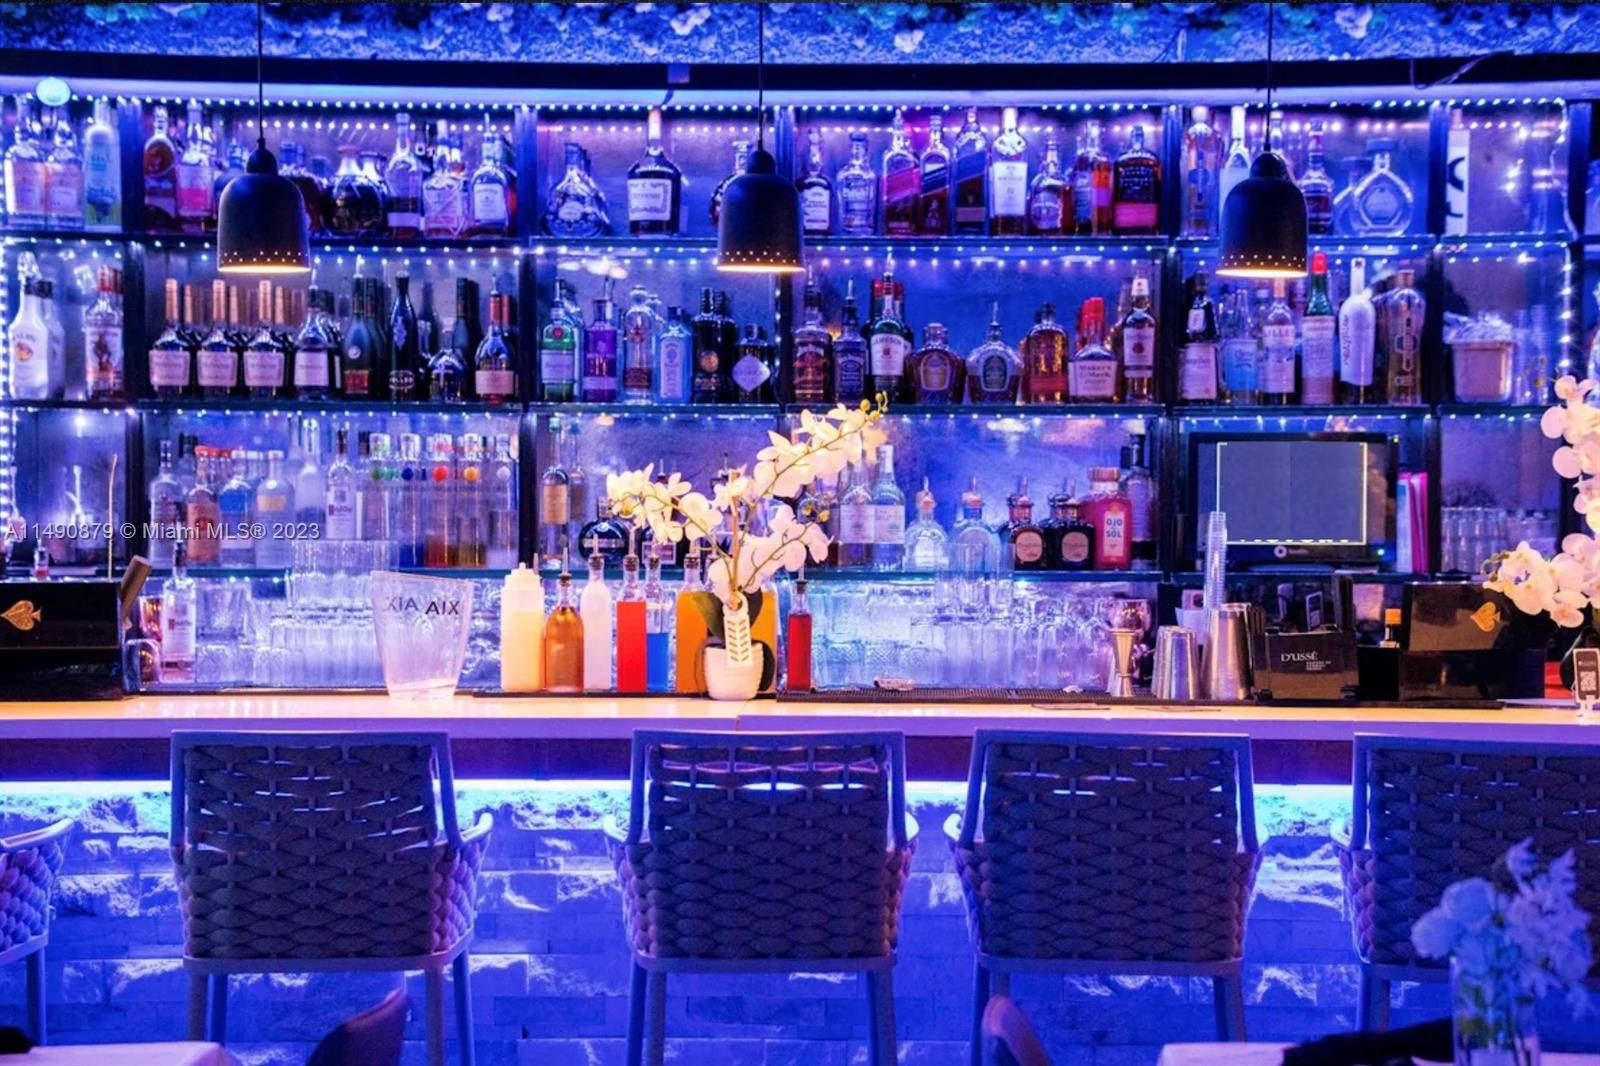 This prestigious dining venue in Miami's Midtown area offers a unique acquisition opportunity.